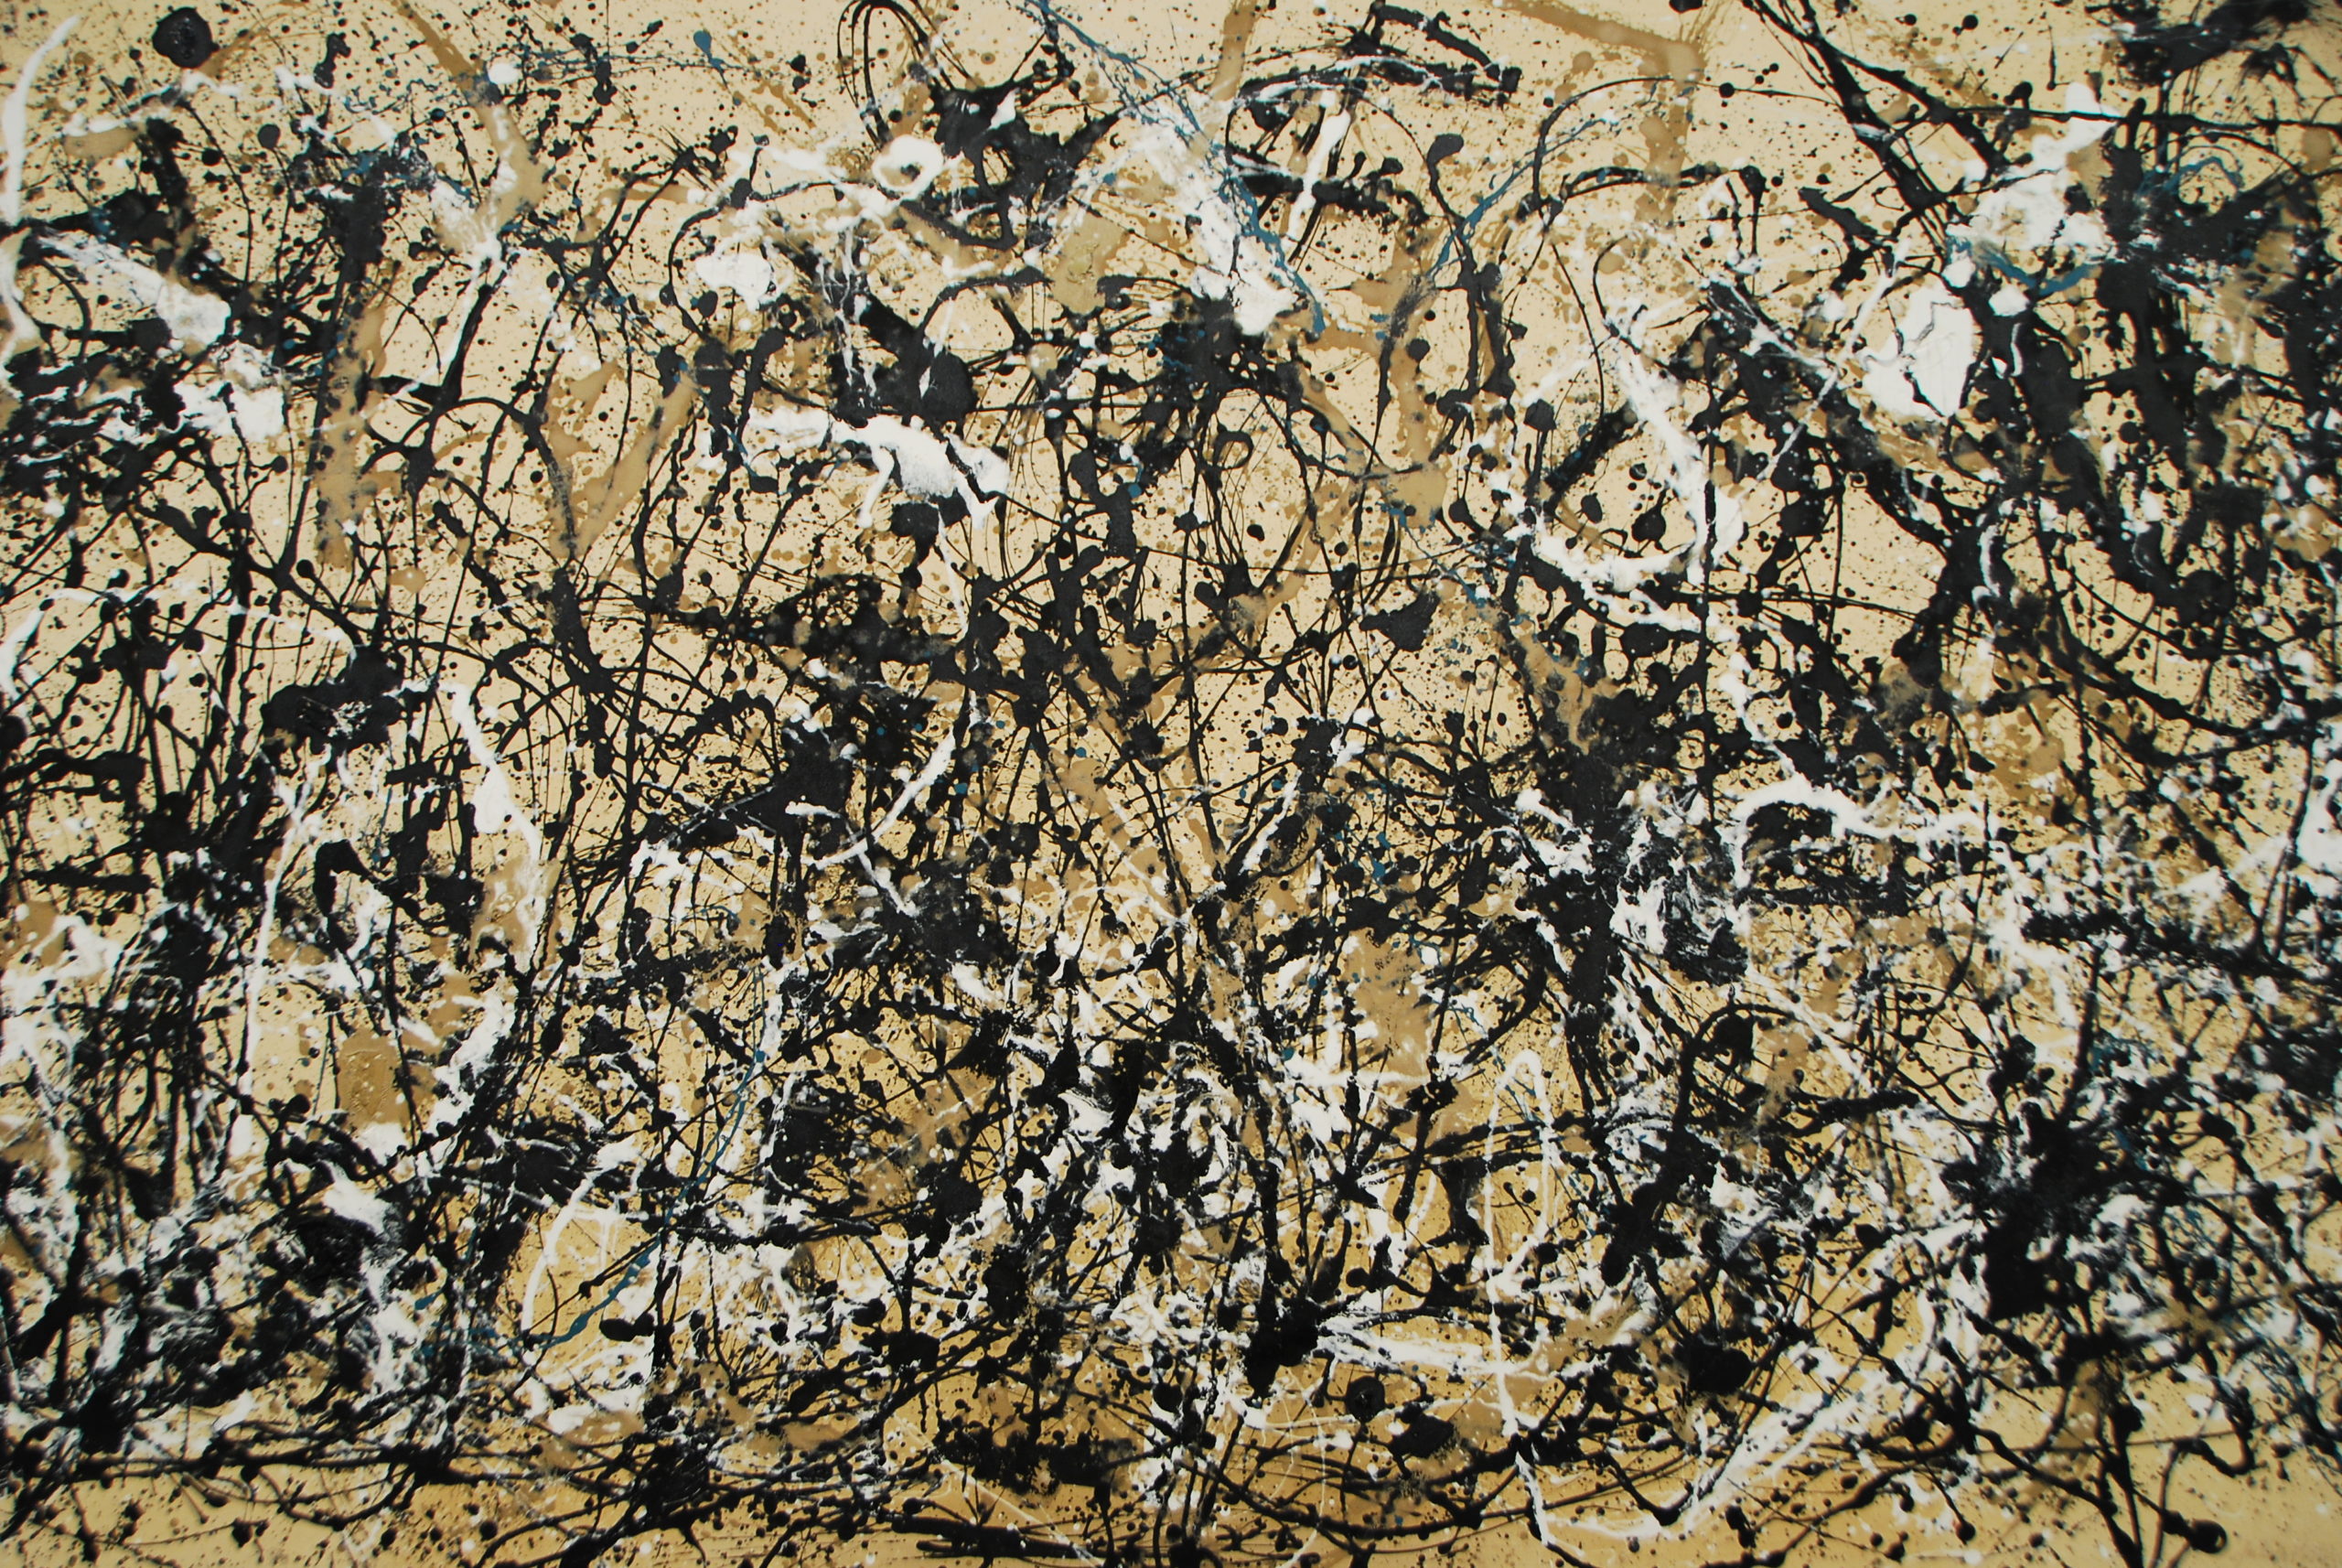 Jackson Pollock - Autumn Rhythm (Number 30), 1950, enamel on canvas, 266.7 x 525.8 cm (8 ft. 9 in. x 17 ft. 3 in.), installation view, Metropolitan Museum of Art, New York